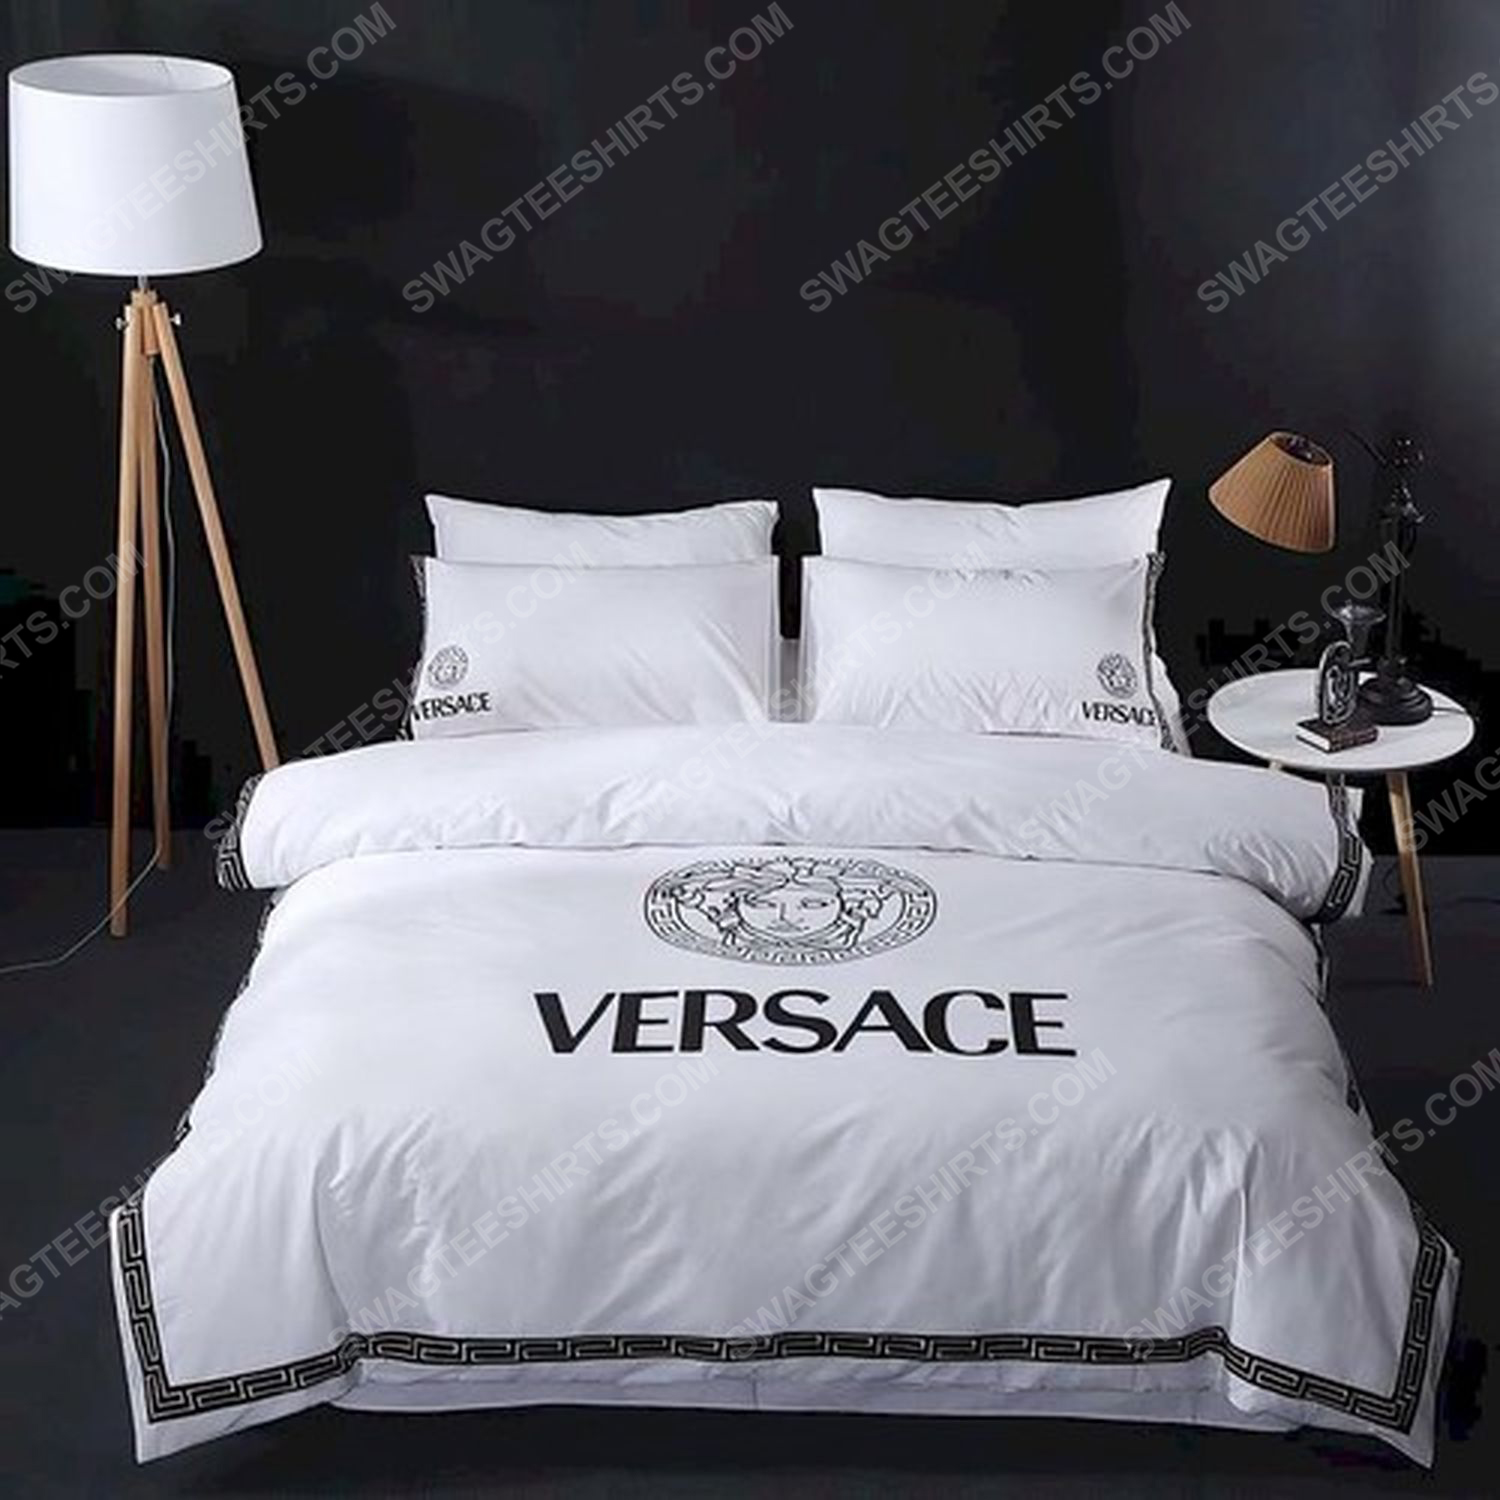 Versace home original full print duvet cover bedding set 2 - Copy